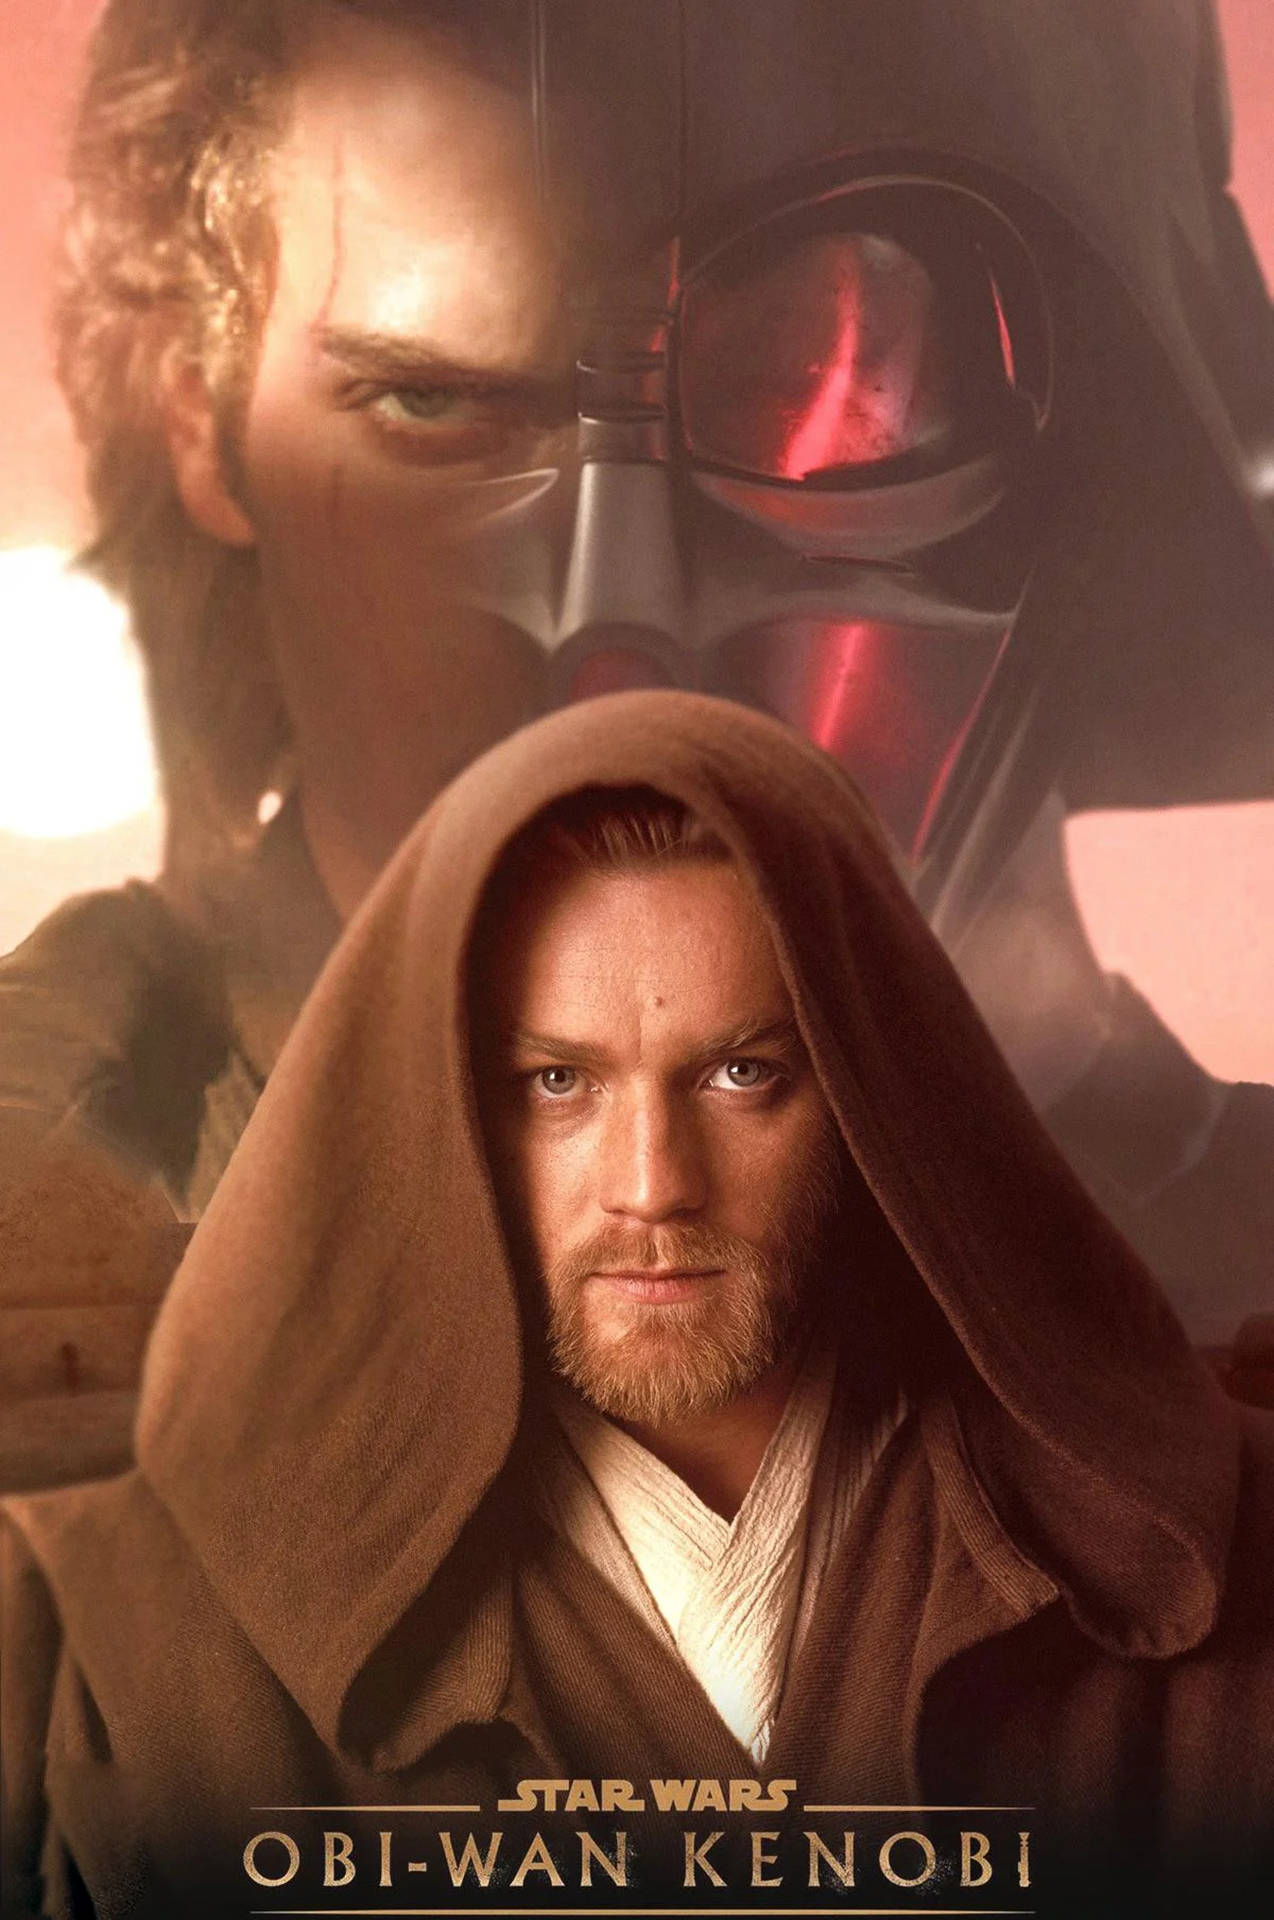 Obi Wan Kenobi And Anakin Sywalker